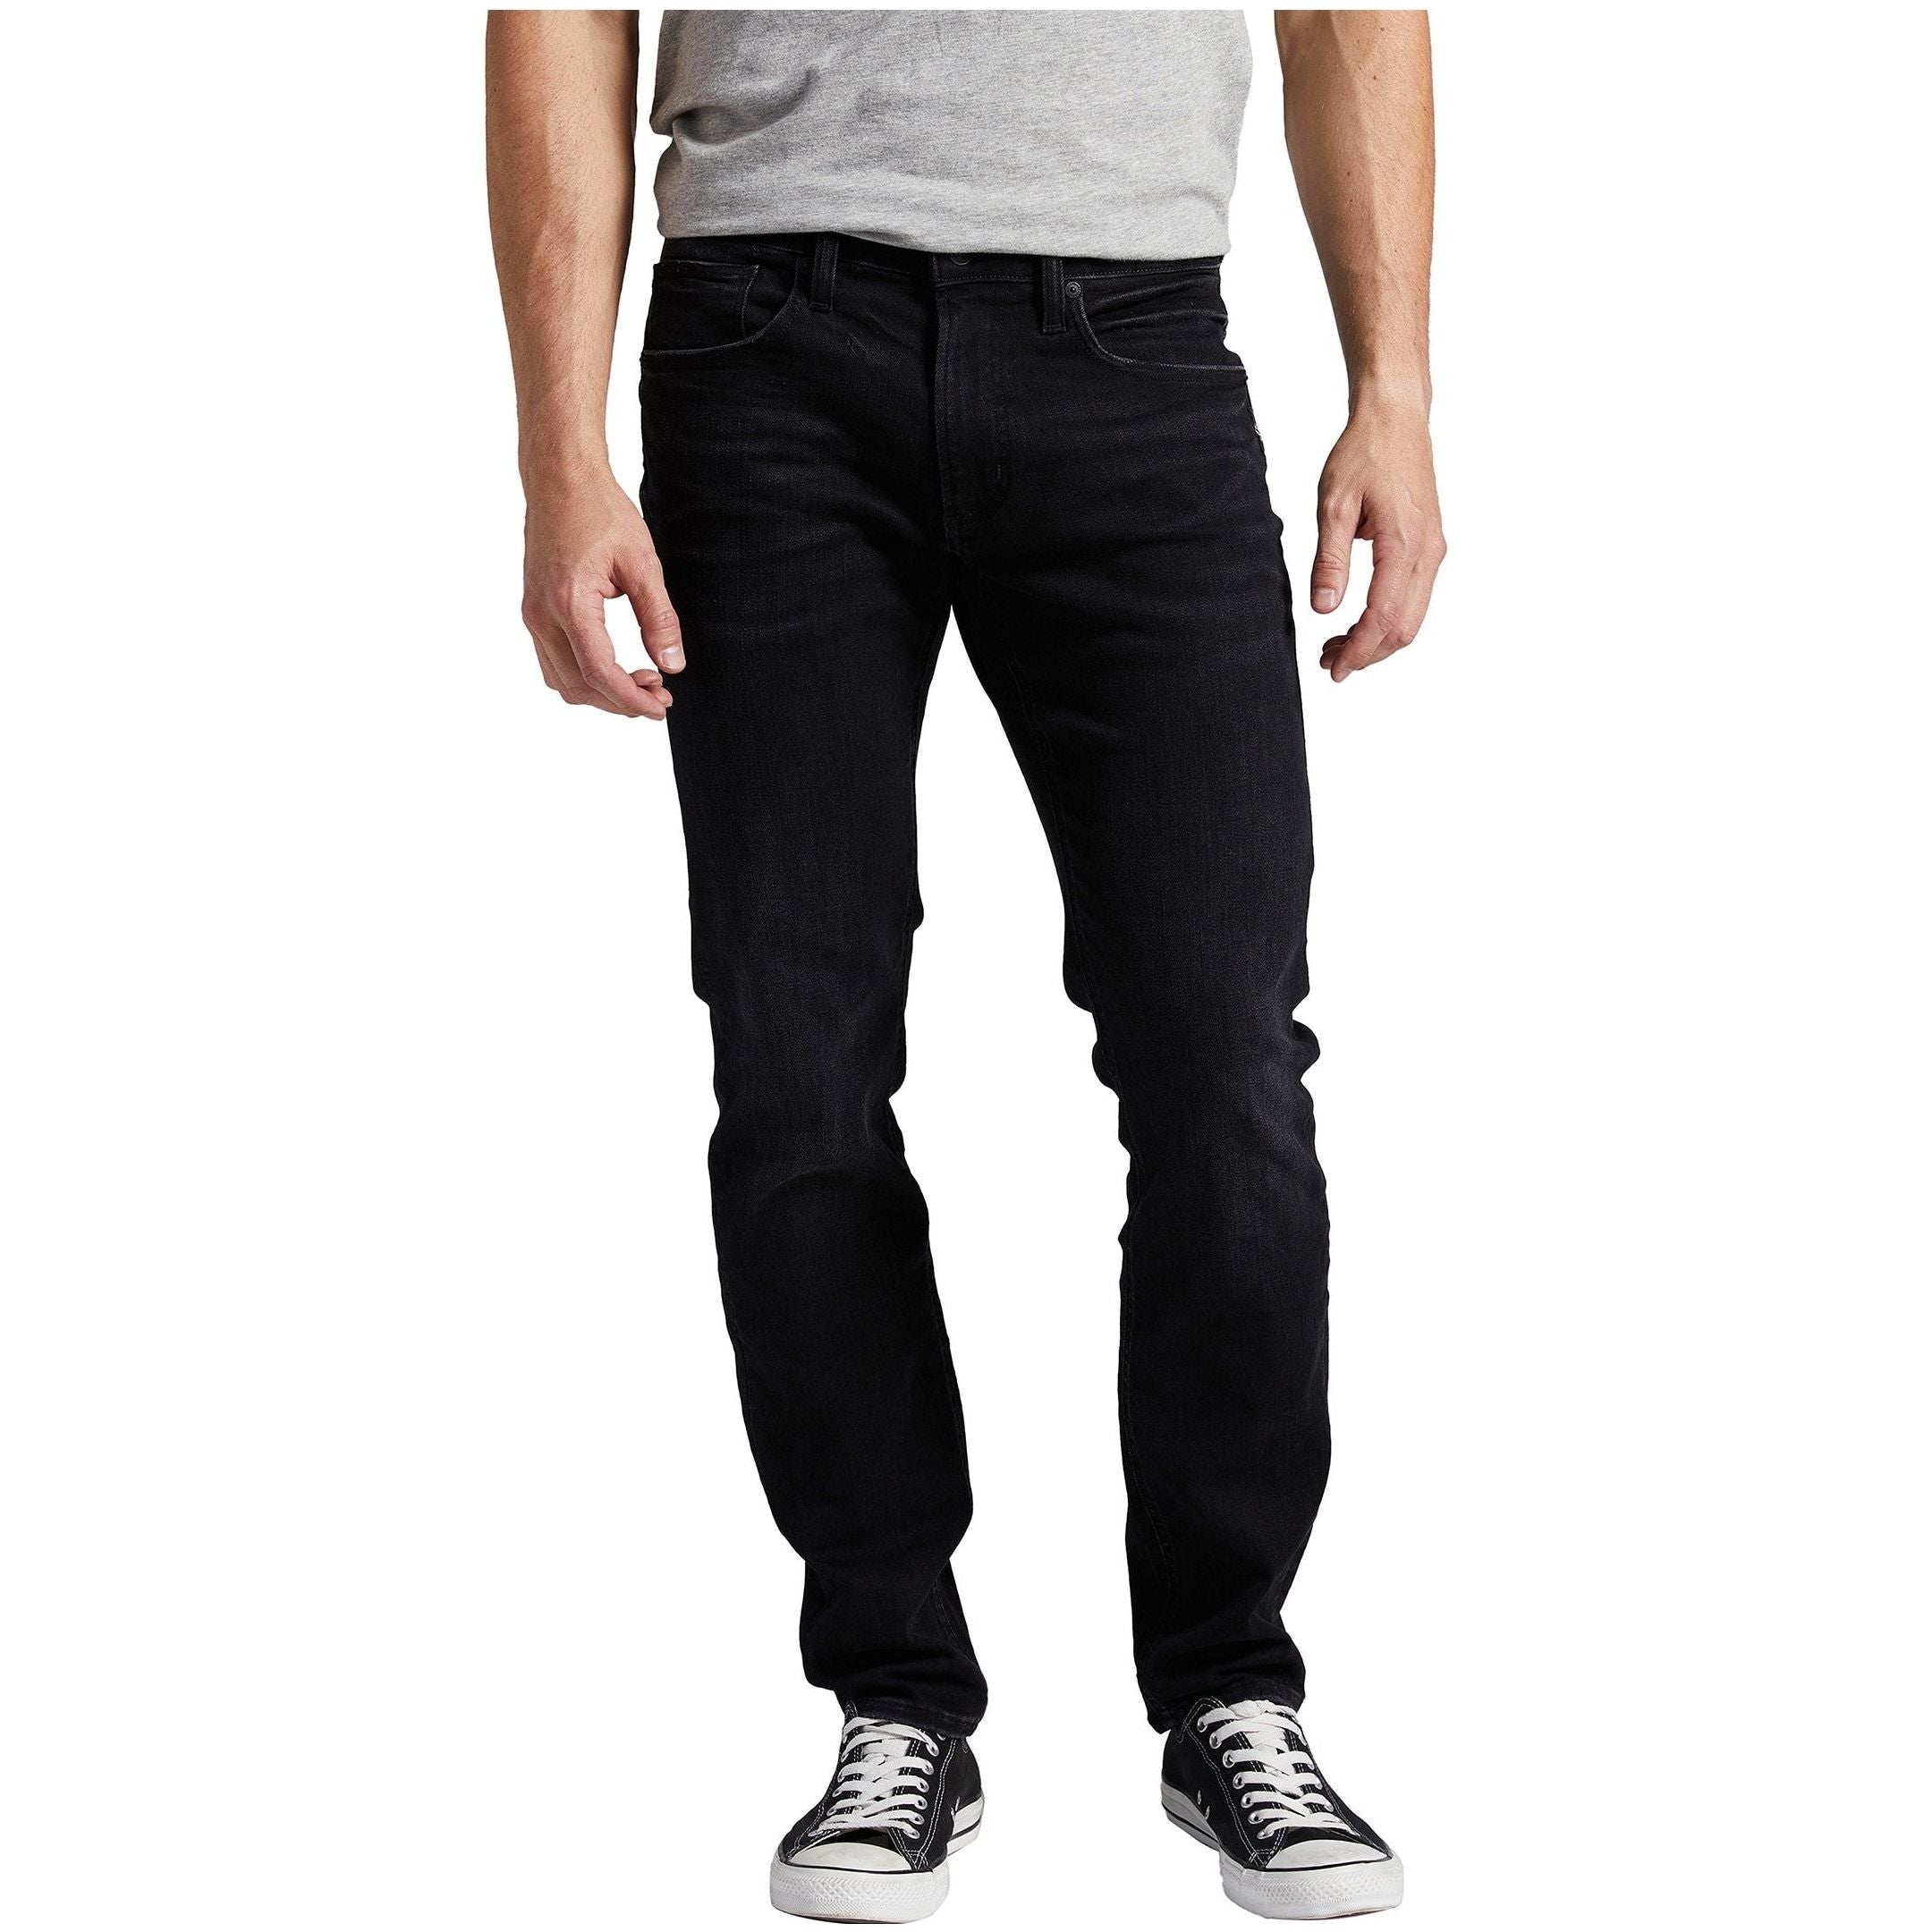 Silver Jeans - Taavi Skinny Leg Jeans in M02105CBB535-SQ4521150